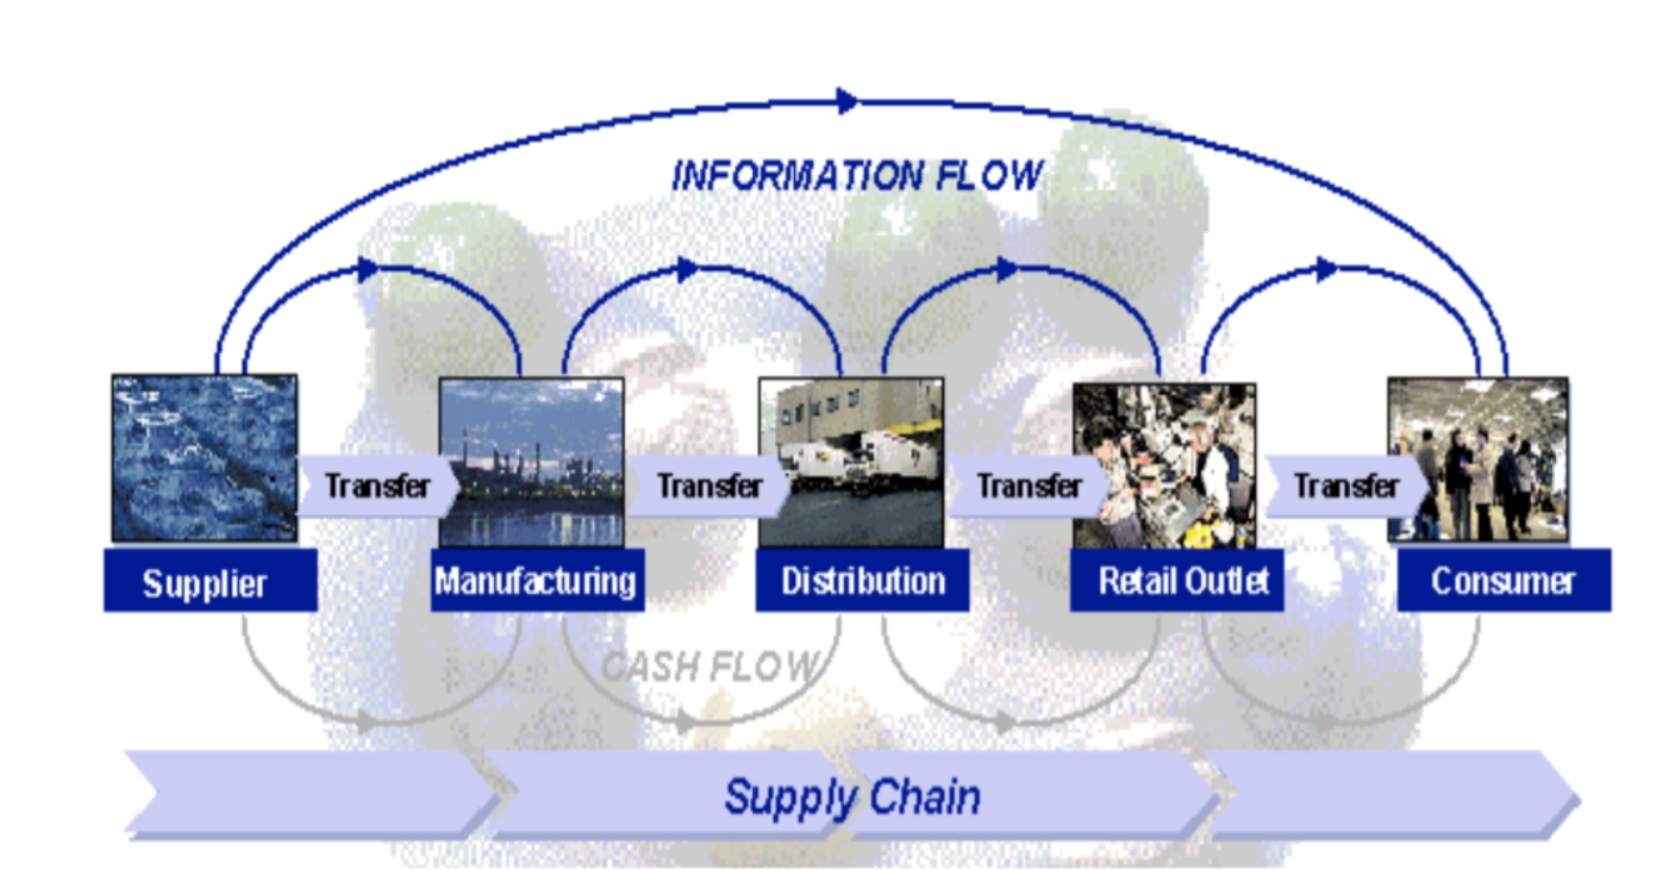 Information Flow in ERP